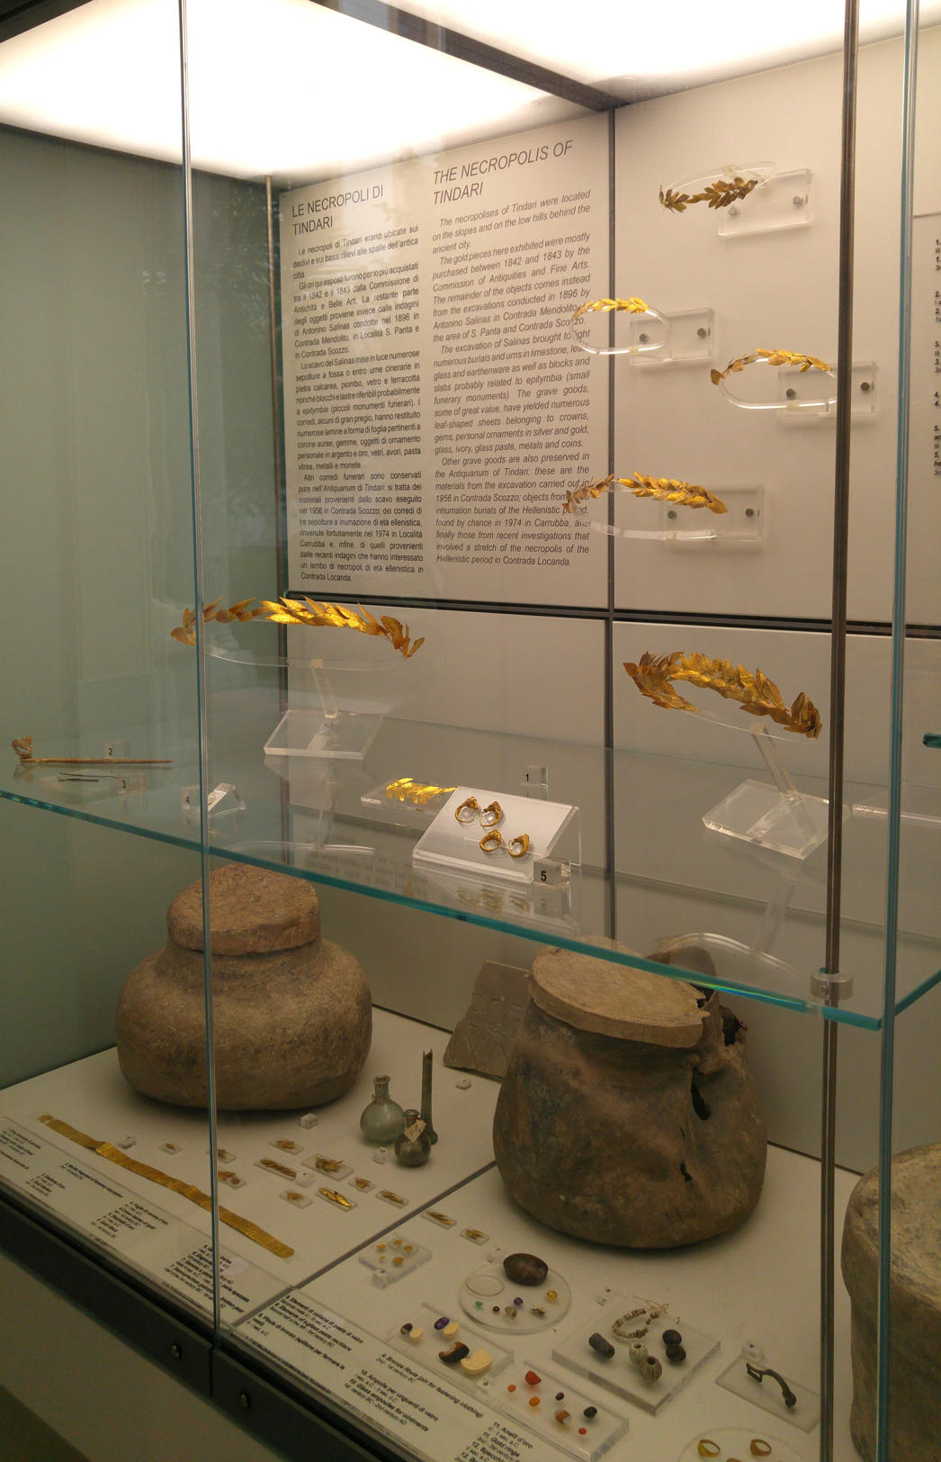 Museo Arqueológico Antonio Salinas - Hallazgos necrópolis de Tindaris